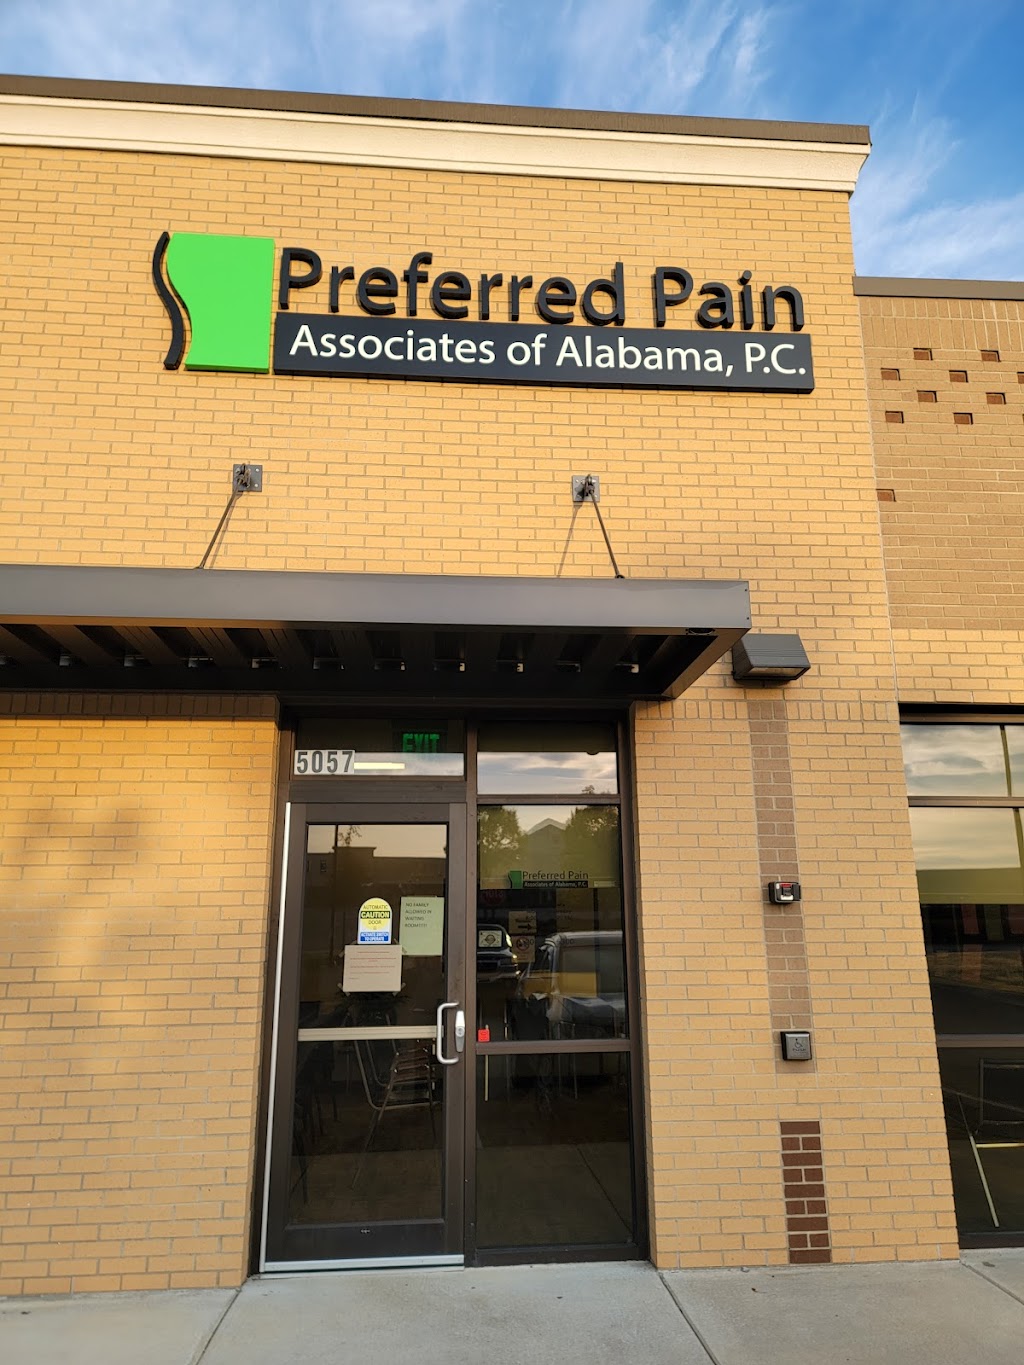 Preferred Pain Associates of Alabama, | Photo 1 of 1 | Address: 5057 Pinnacle Square, Birmingham, AL 35235, USA | Phone: (205) 508-5300